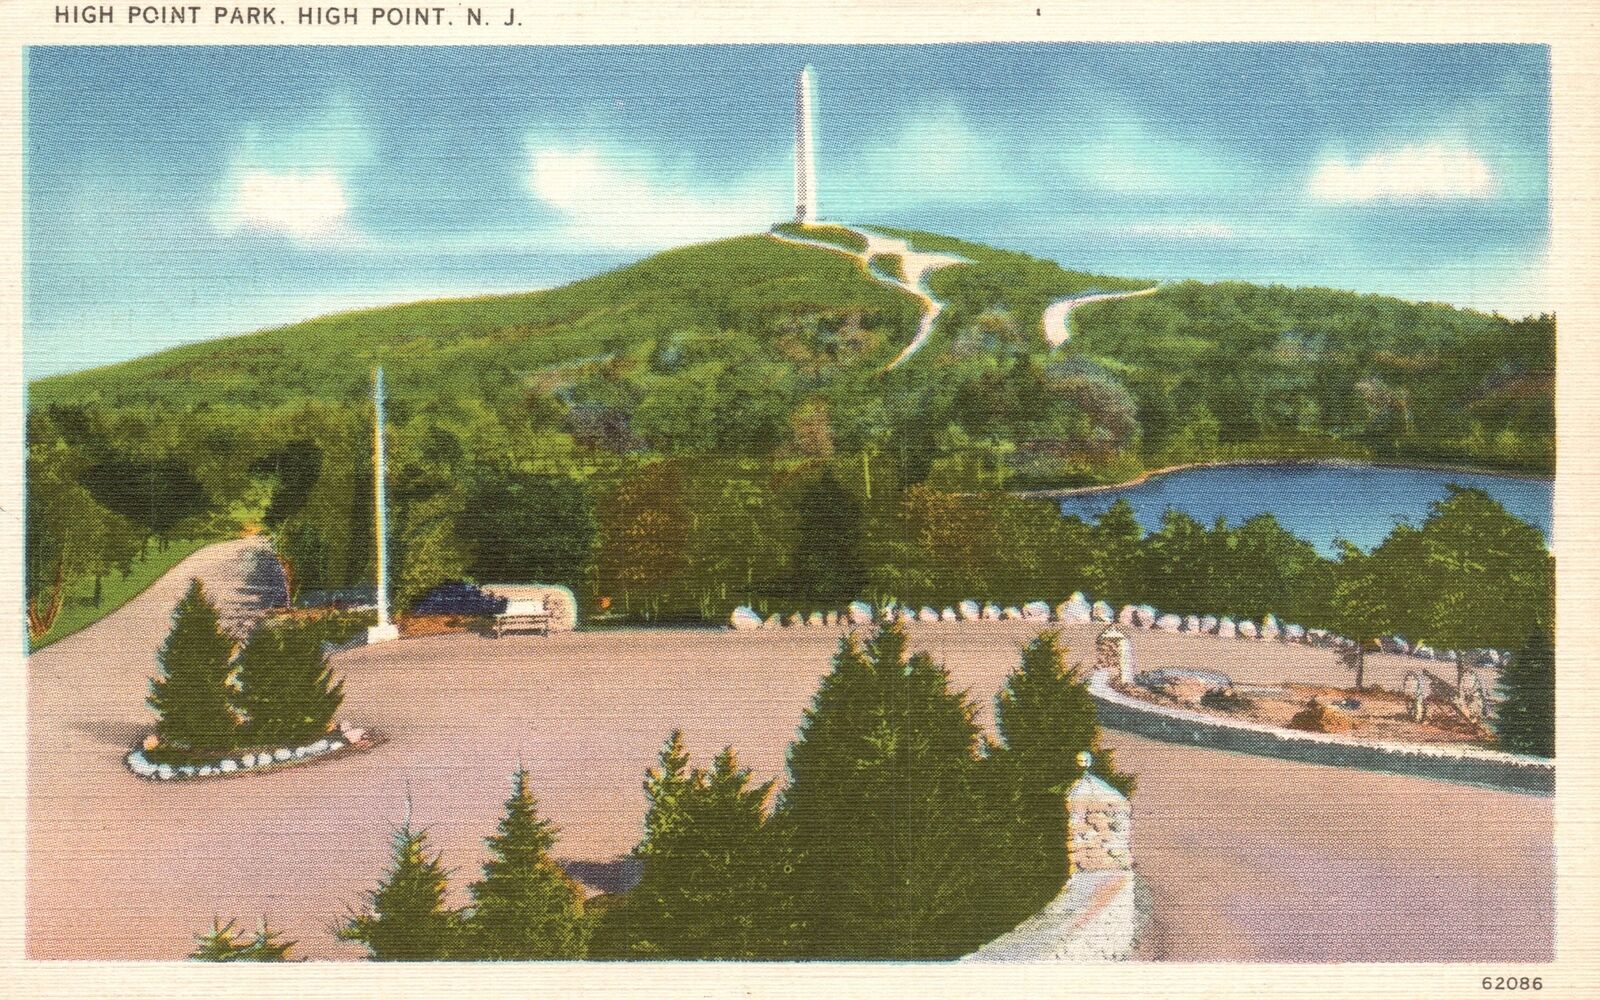 Vintage Postcard High Point Park Overlooking Monument Landscape High Point NJ